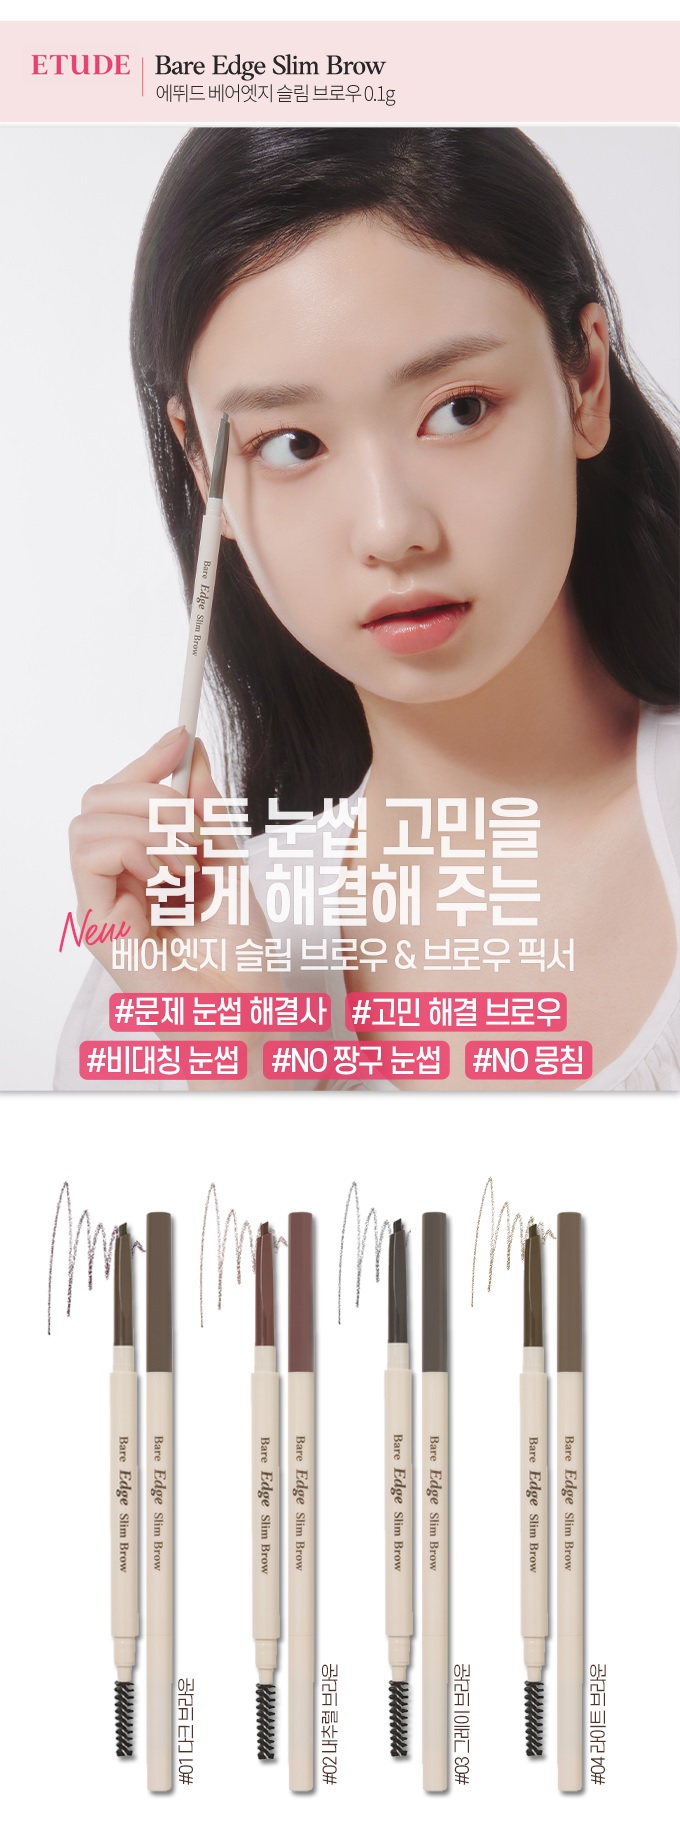 Etude House Bare Edge Slim Brow korean skincare product online shop malaysia china india1